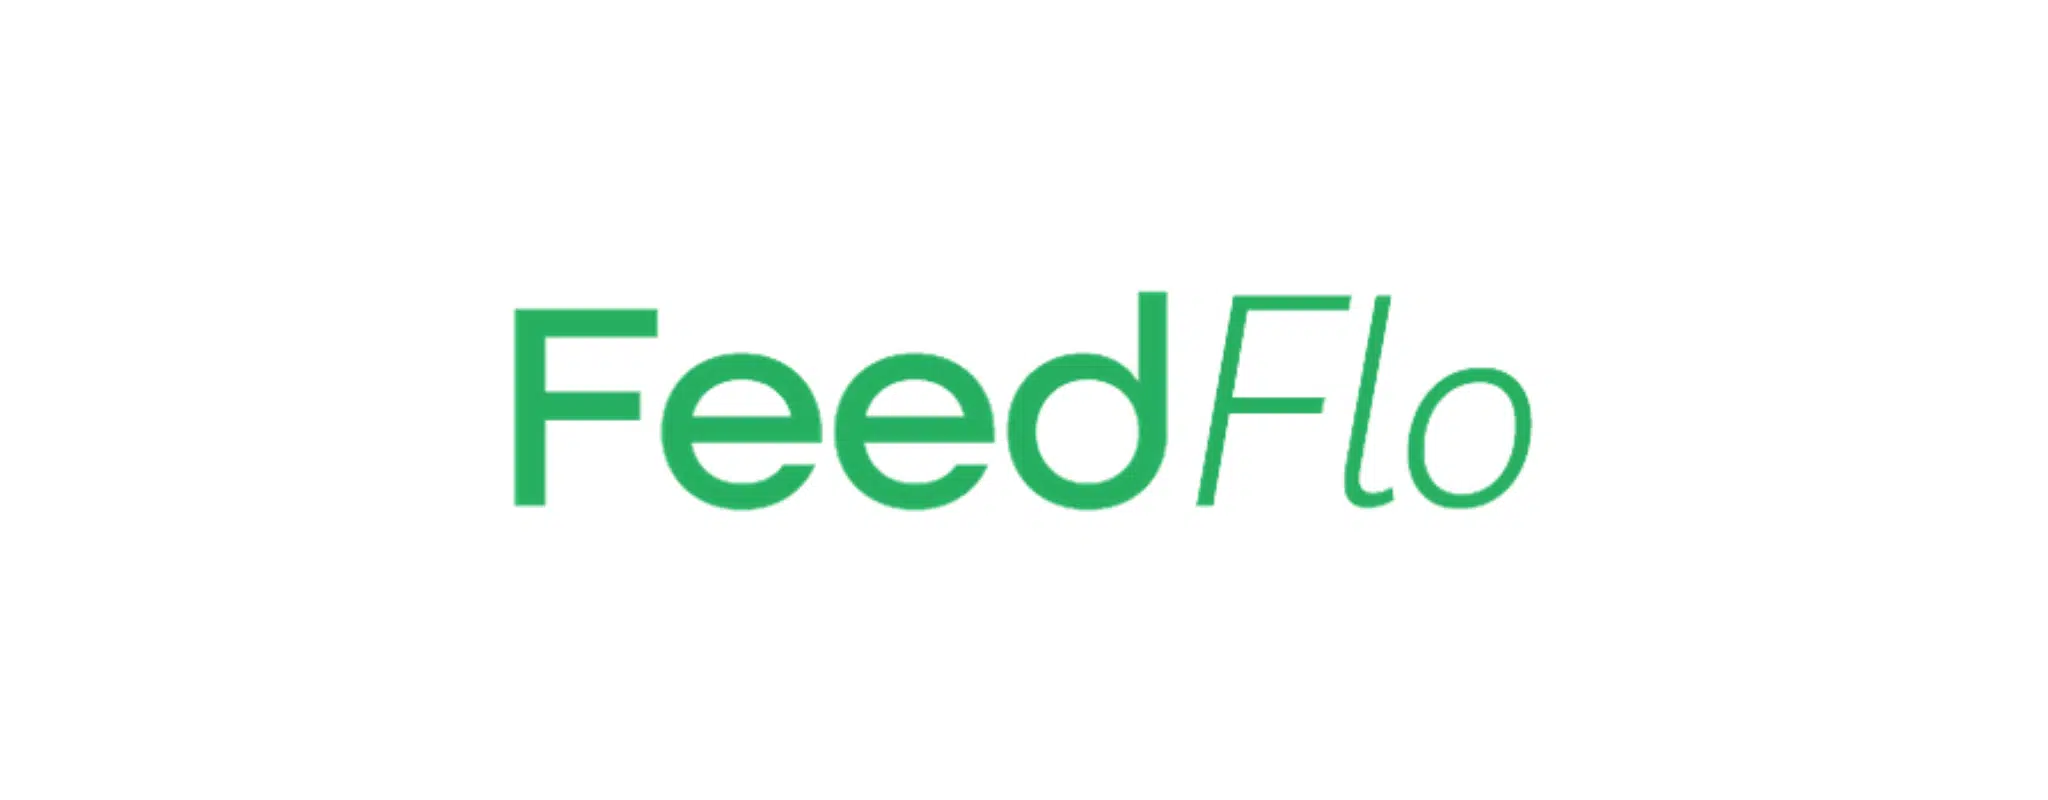 FeedFlo logo